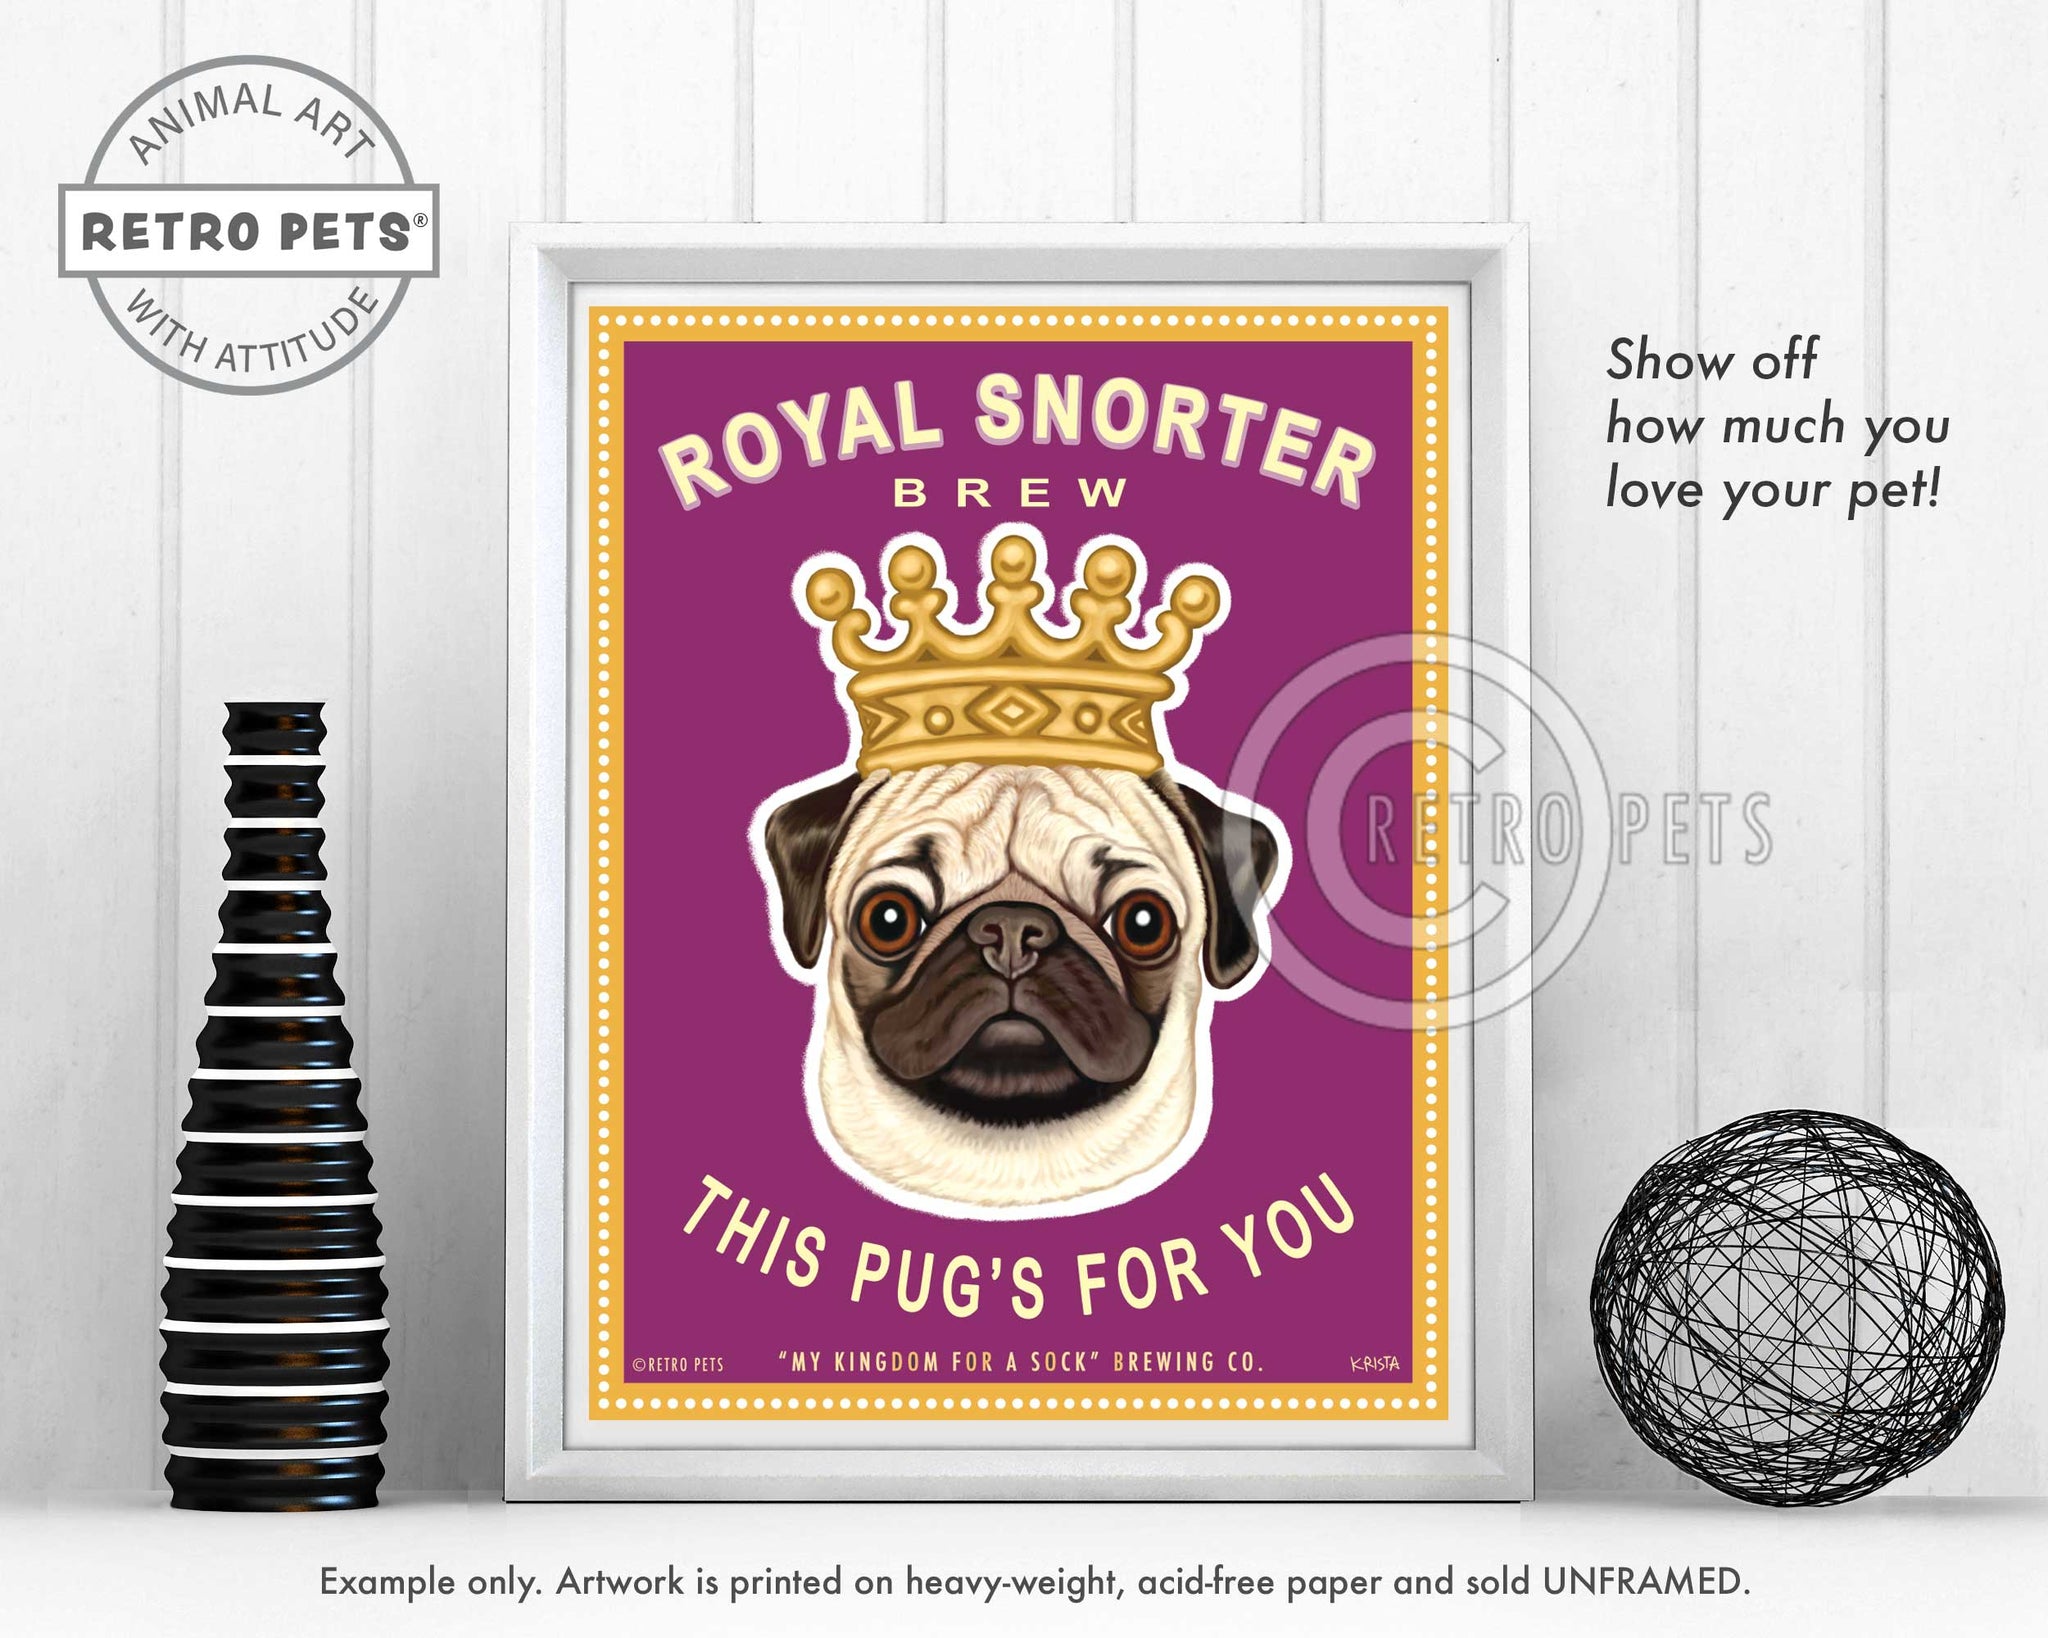 Pug Art "Royal Snorter Brew" Art Print by Krista Brooks